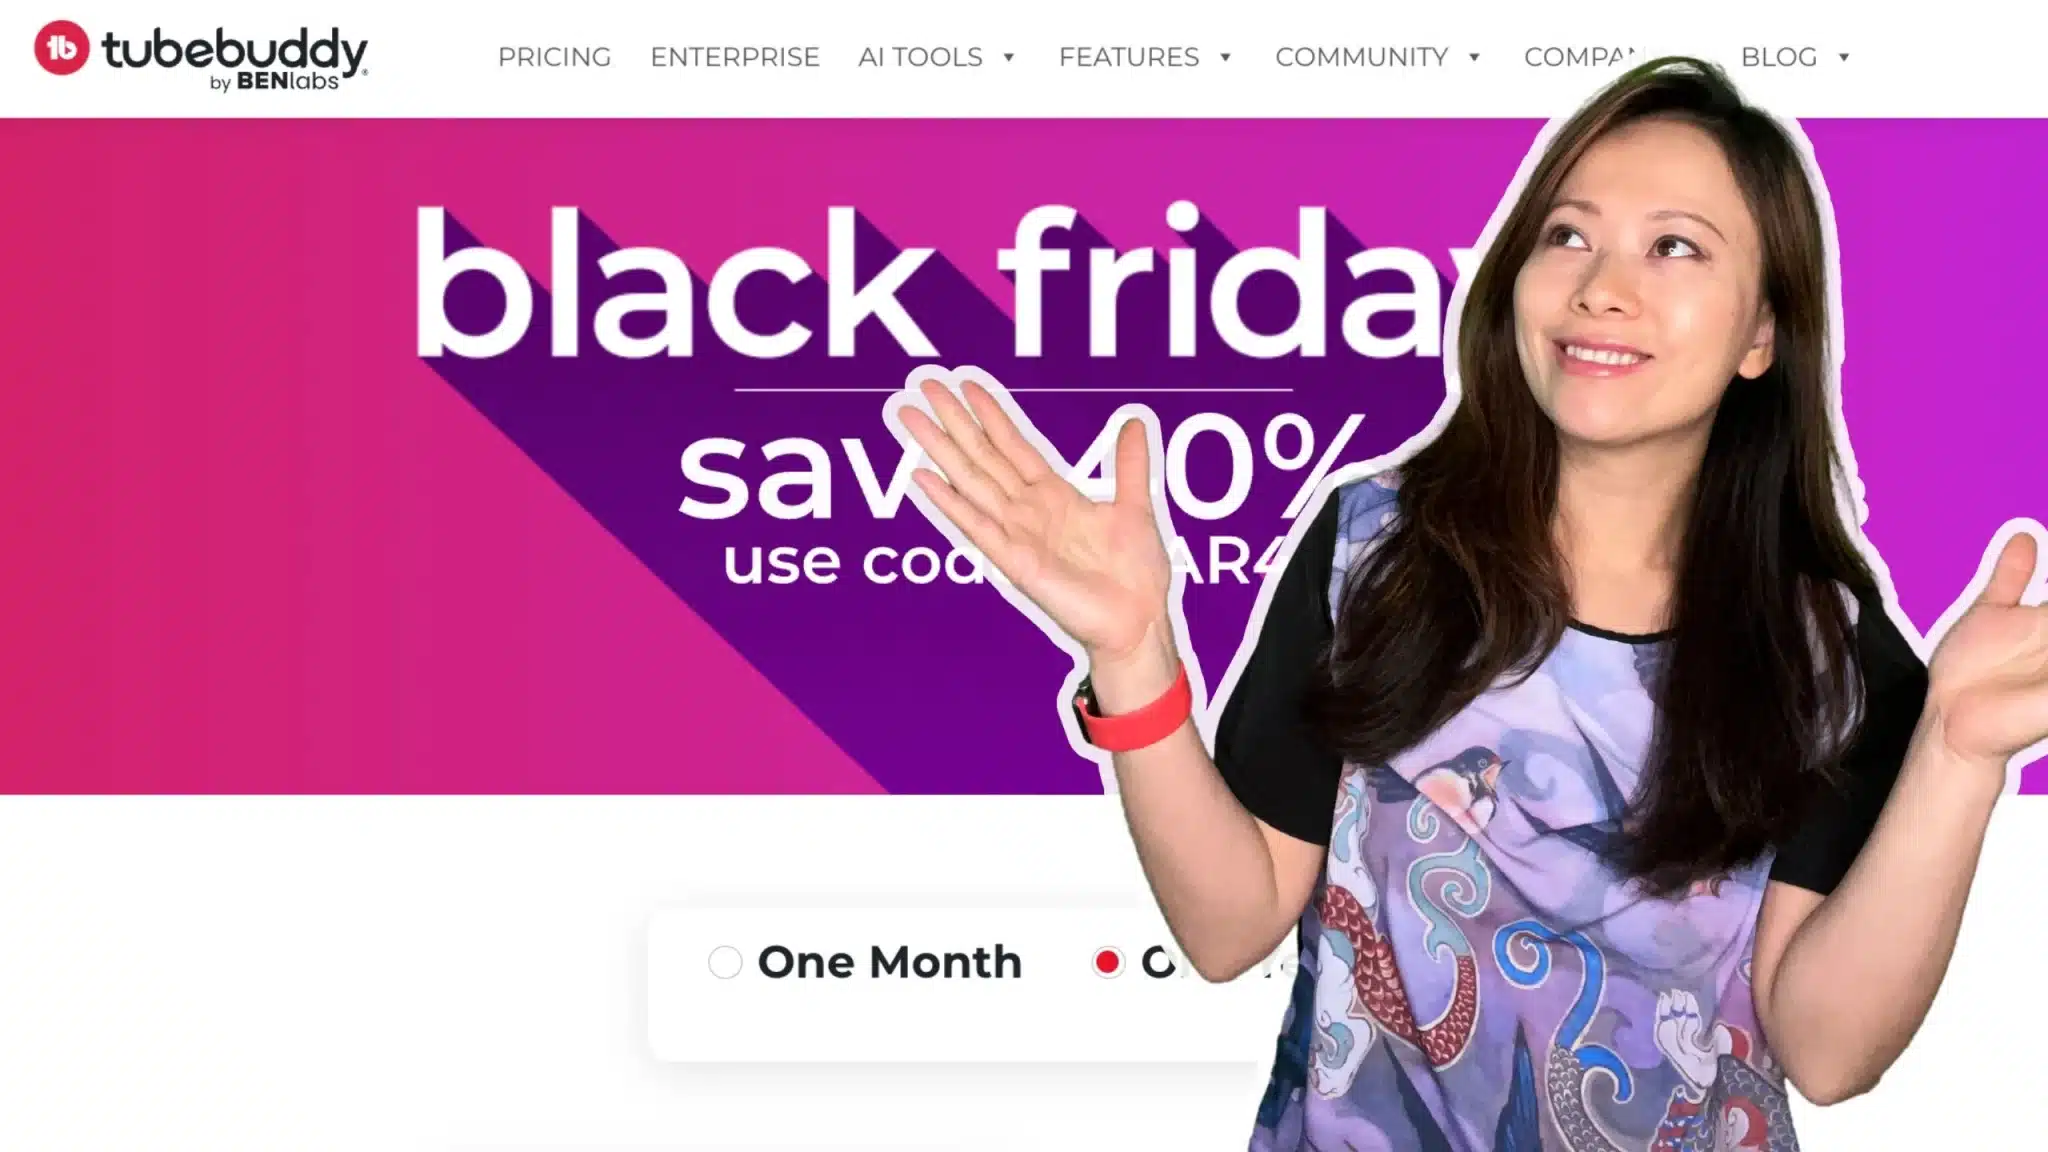 TubeBuddy Black Friday Sale: Save 40%